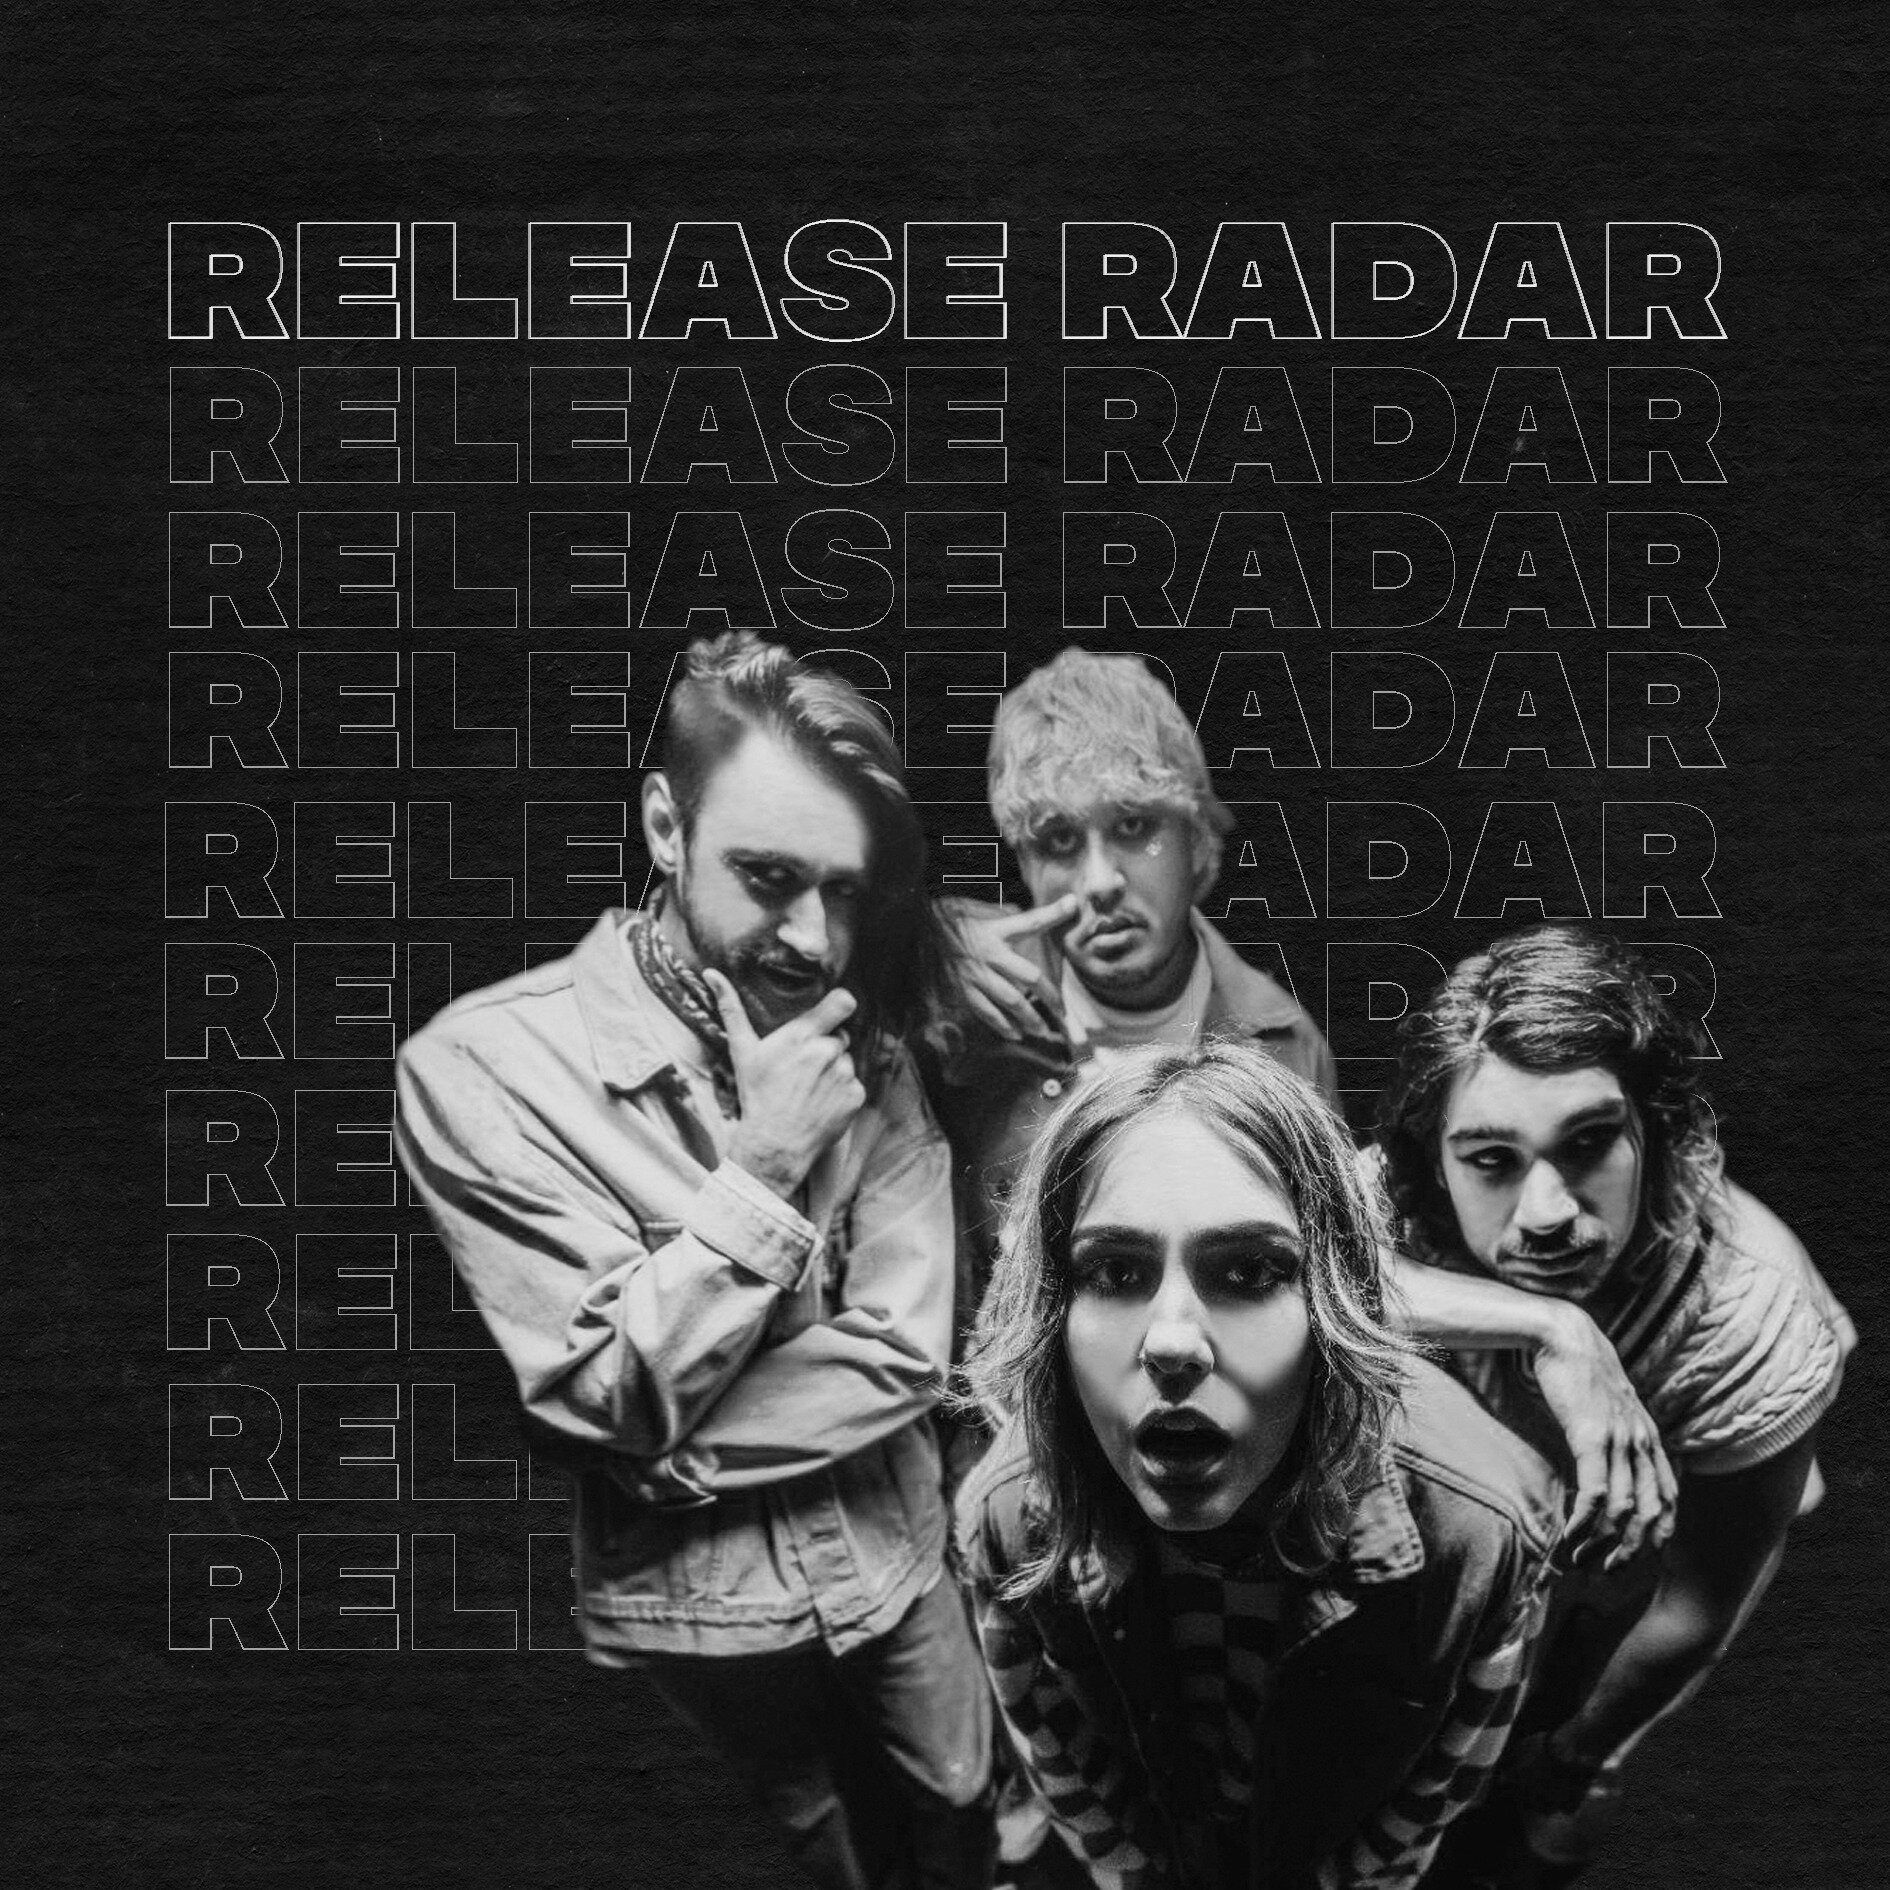 🚨 RELEASE RADAR UPDATE 🚨 featuring @standatlantic on the cover, with tracks from @flowerovlove, @jamesmarriottyt, @havemercymd, @vukoviband, @newyearsdayband, @neckdeepuk, @musicbyknox, @xboygeniusx, @tatemcrae and more! ✨